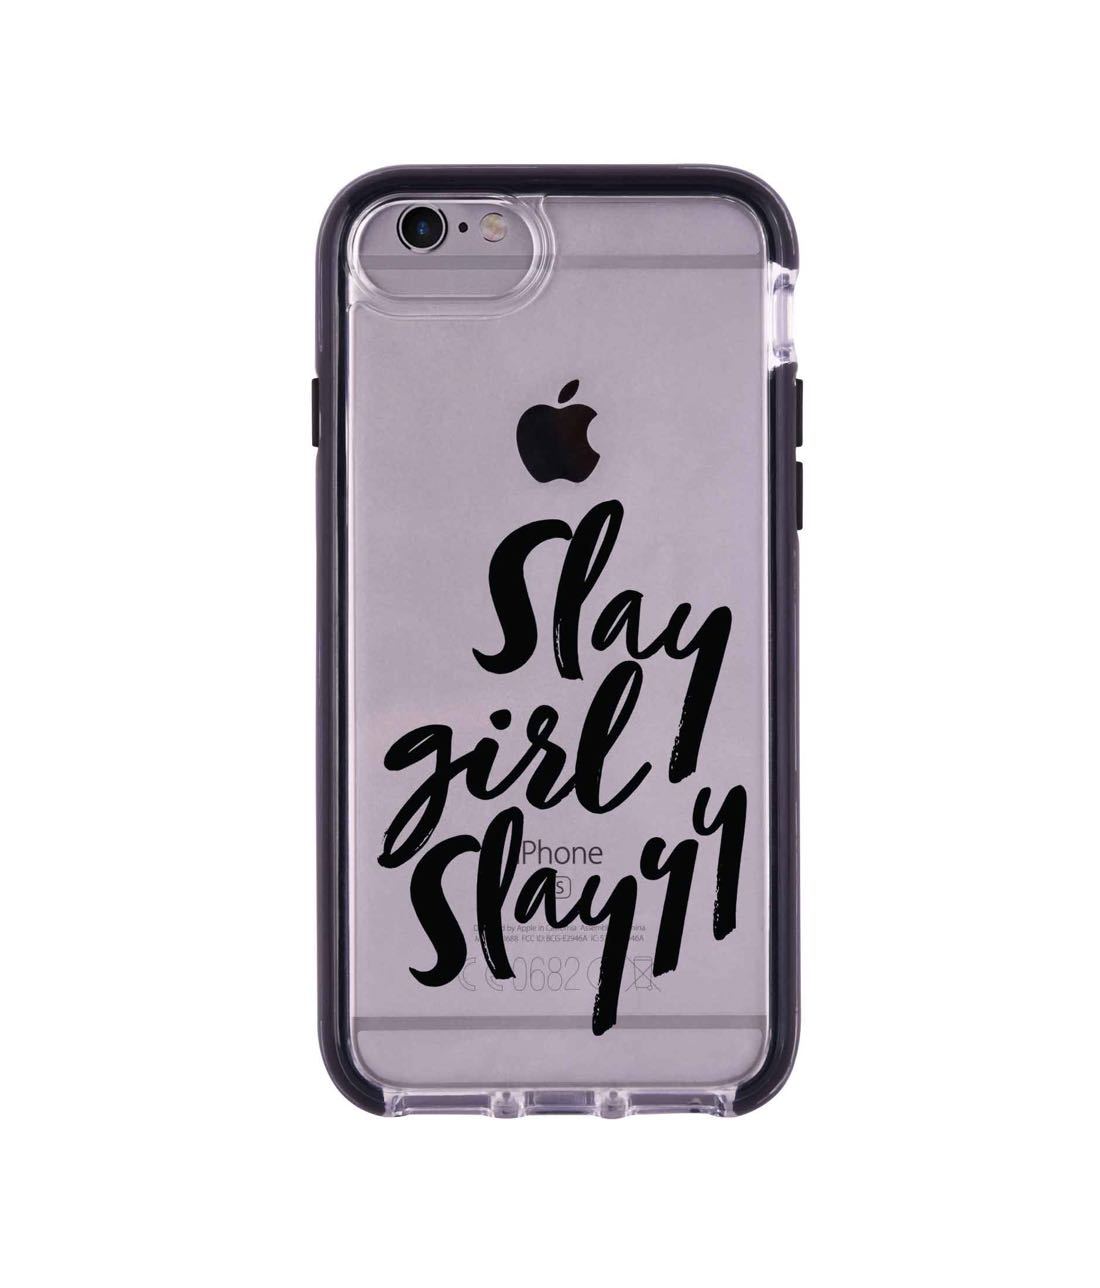 Slay girl Slay - Extreme Phone Case for iPhone 6S Plus